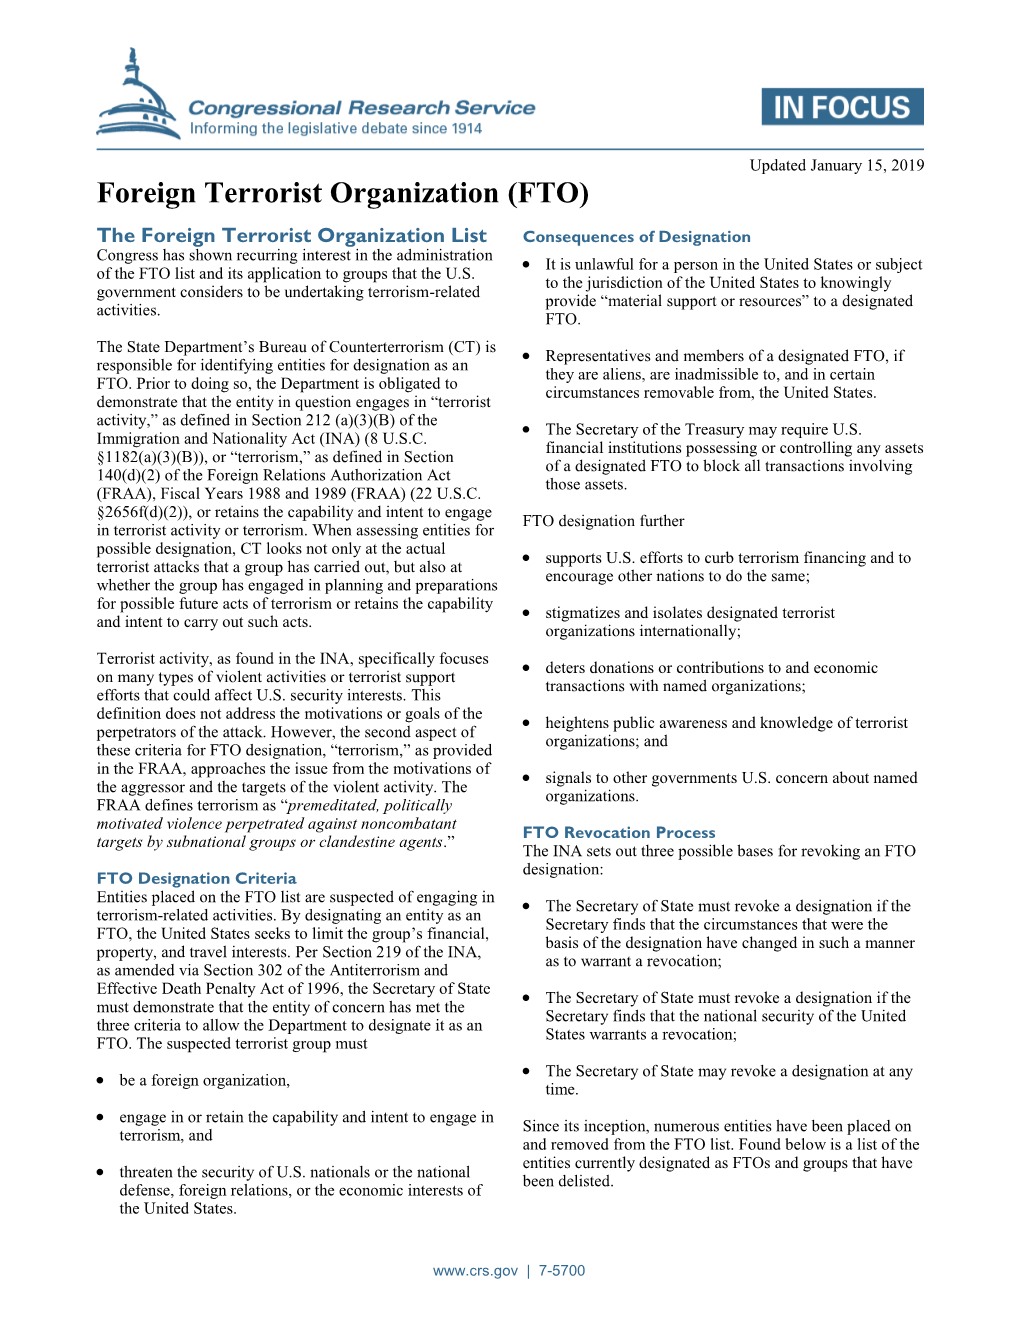 Foreign Terrorist Organization (FTO) Designation